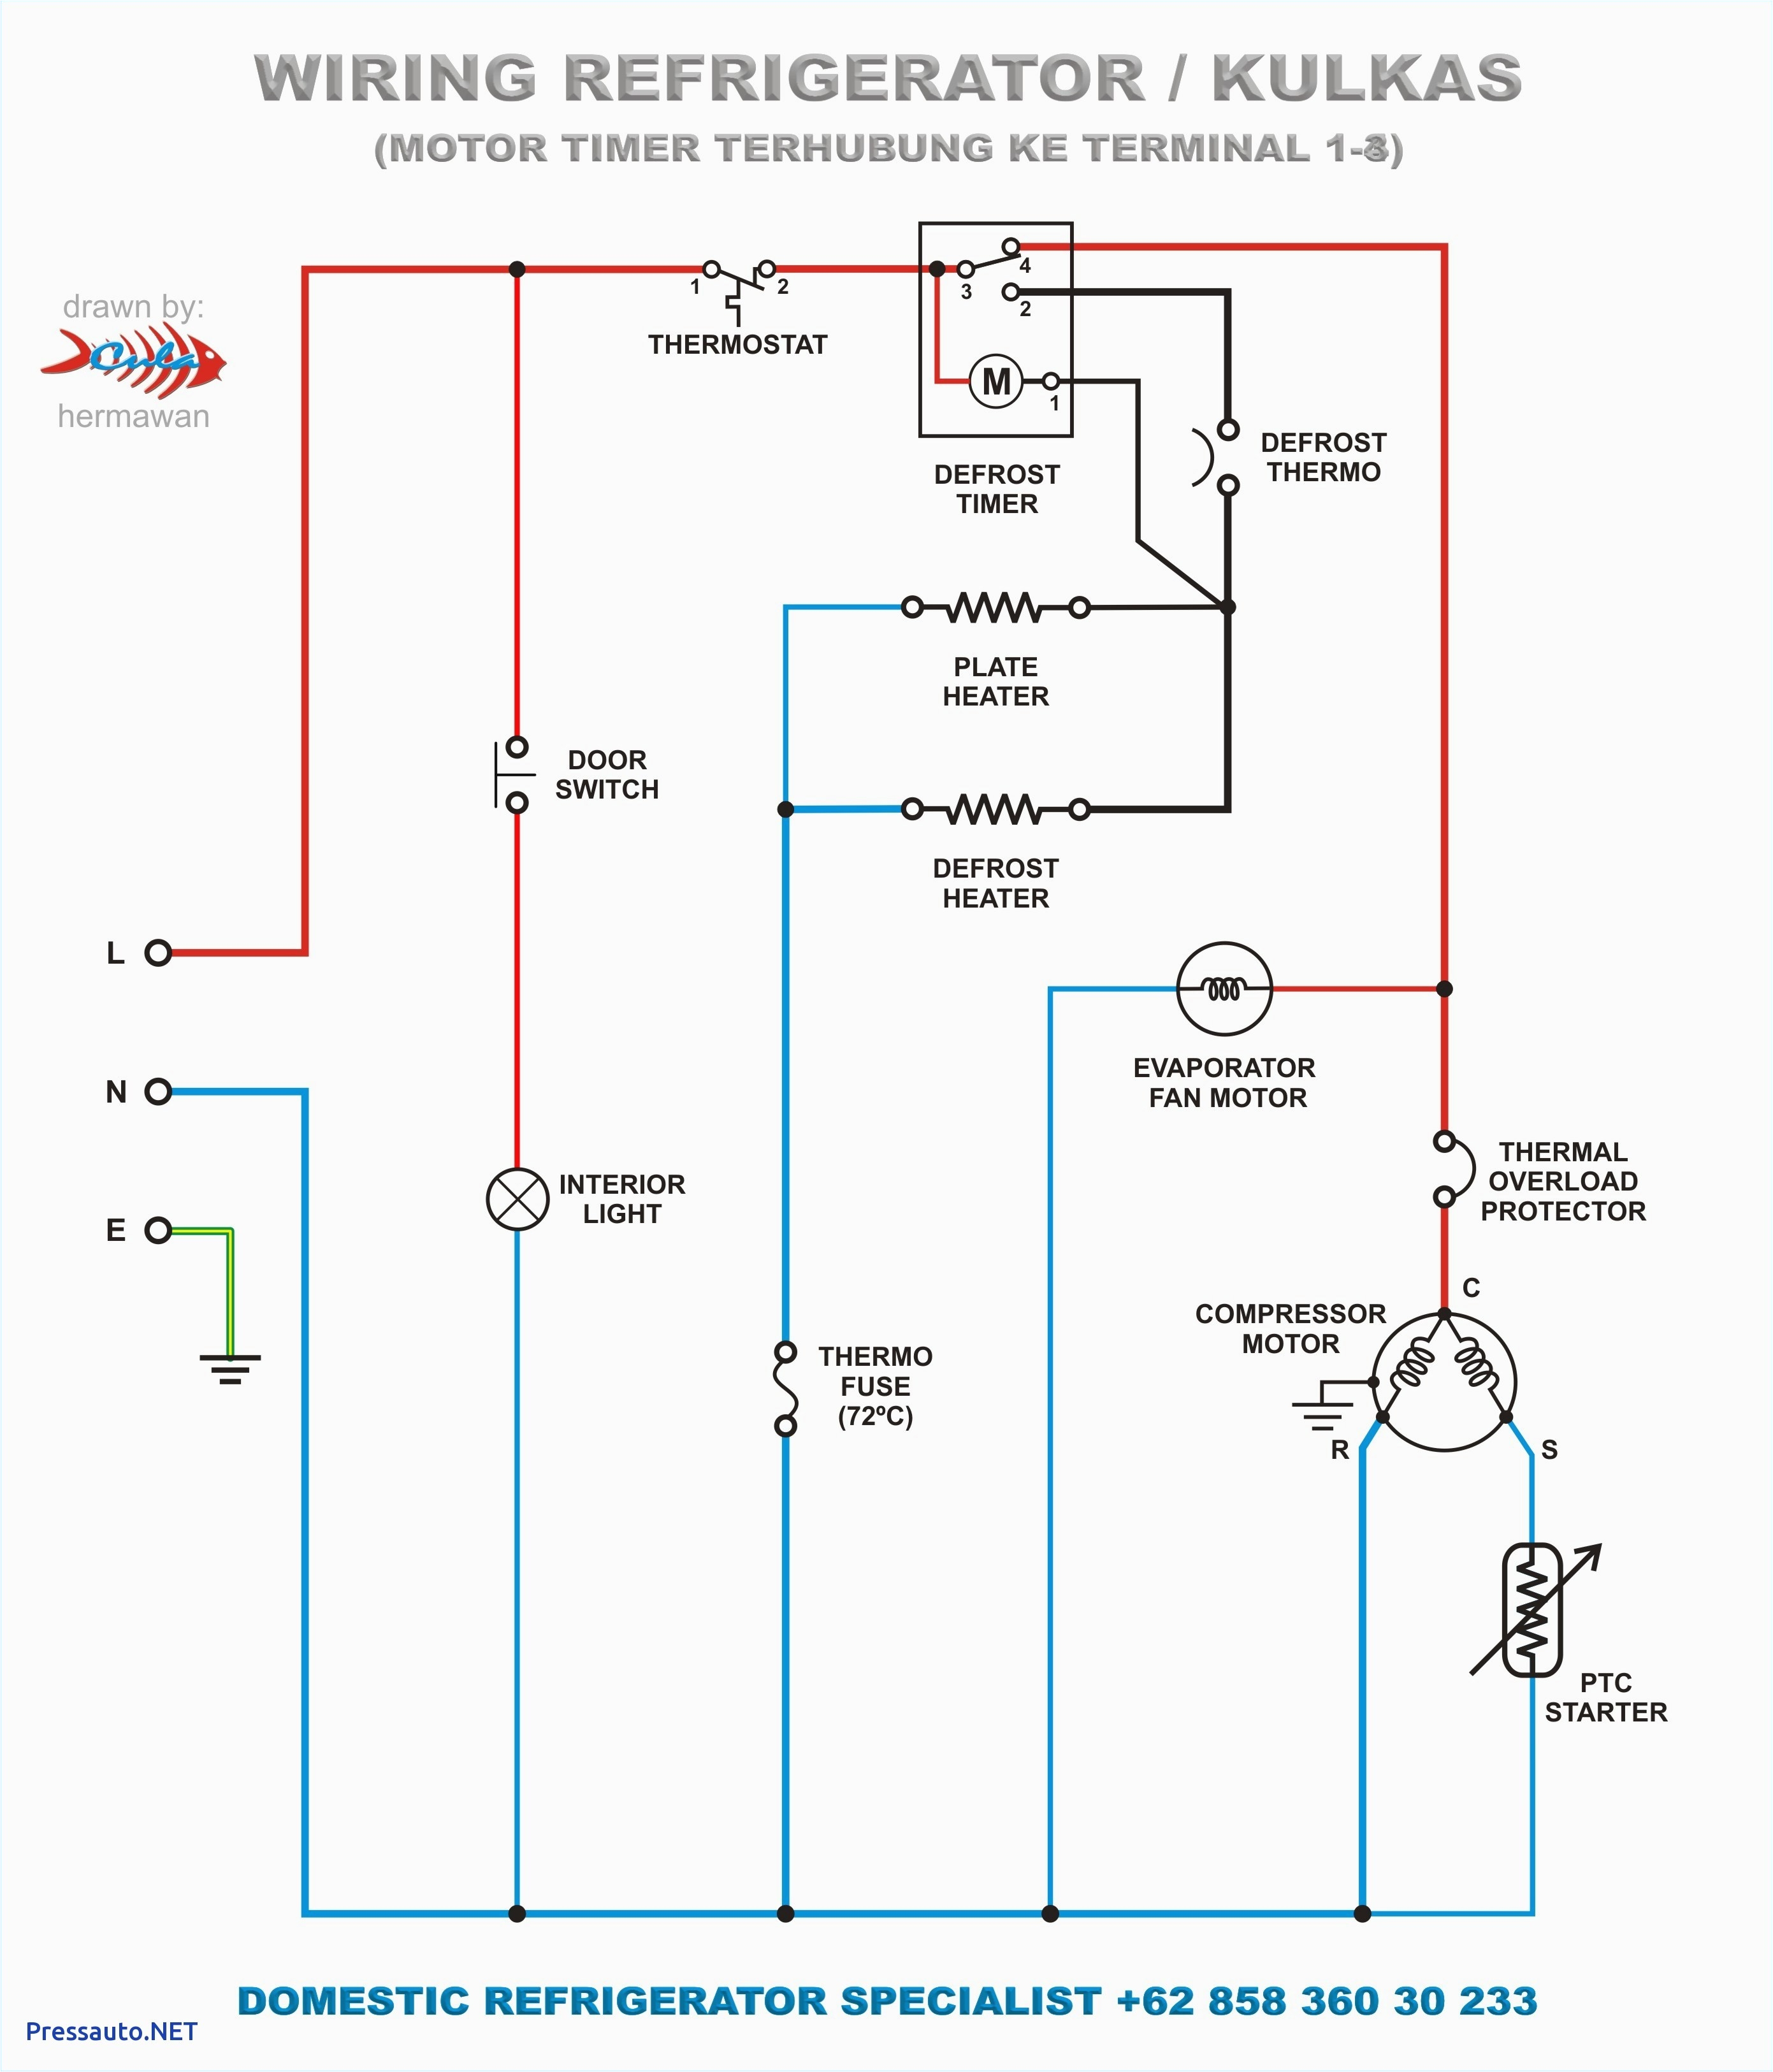 fridge relay wiring diagram best of ptc relay wiring diagram wire center